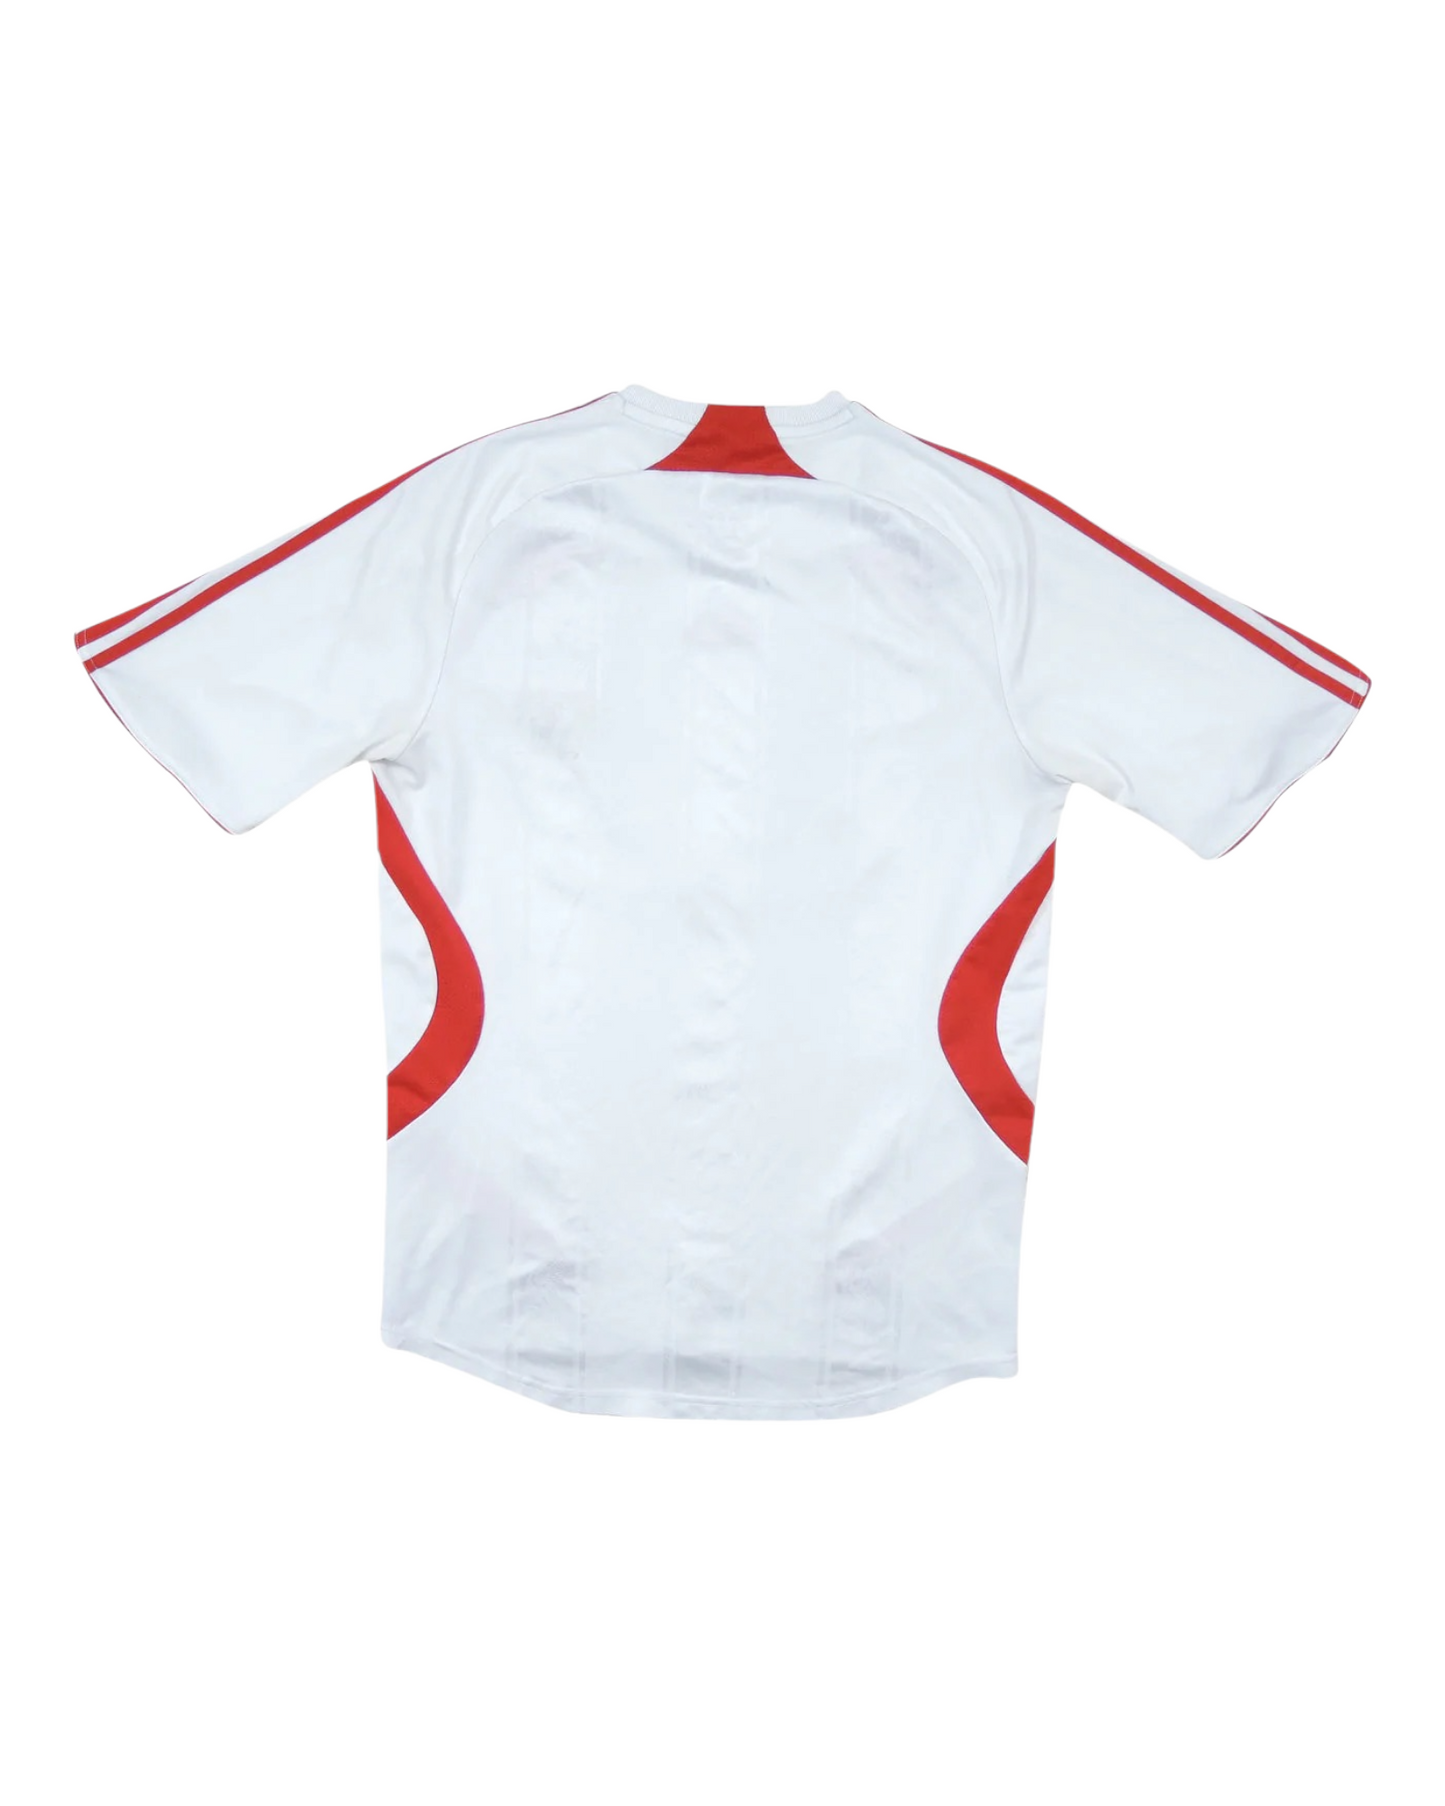 Liverpool FC Adidas 2007 - 2008 Away Football Shirt Size M Carlsberg White Climacool